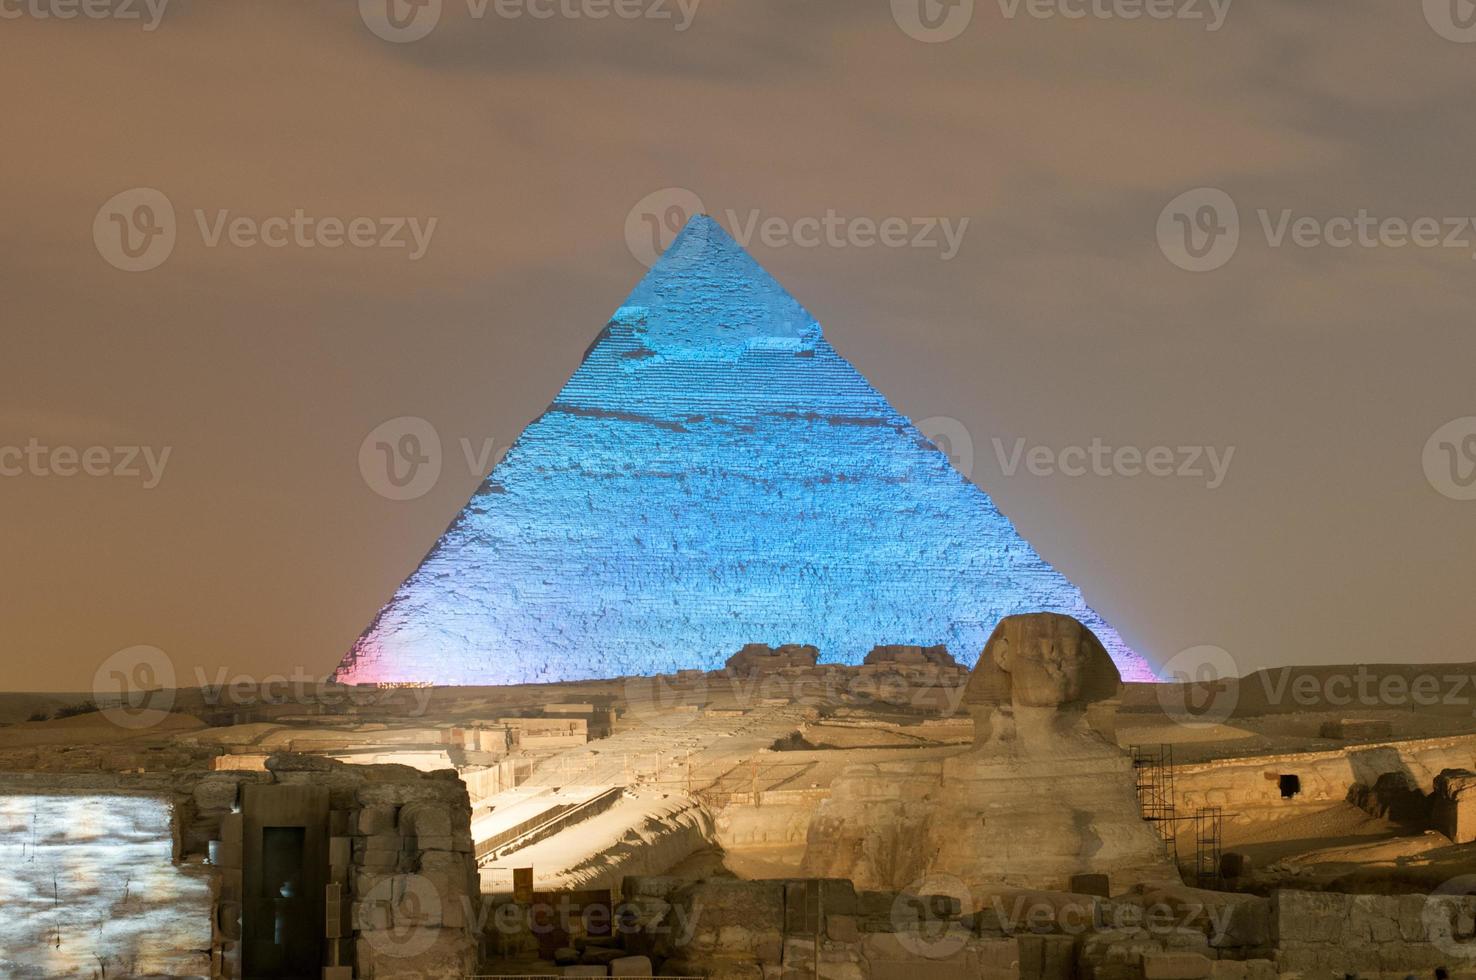 Giza piramide e sfinge leggero mostrare a notte - Cairo, Egitto foto